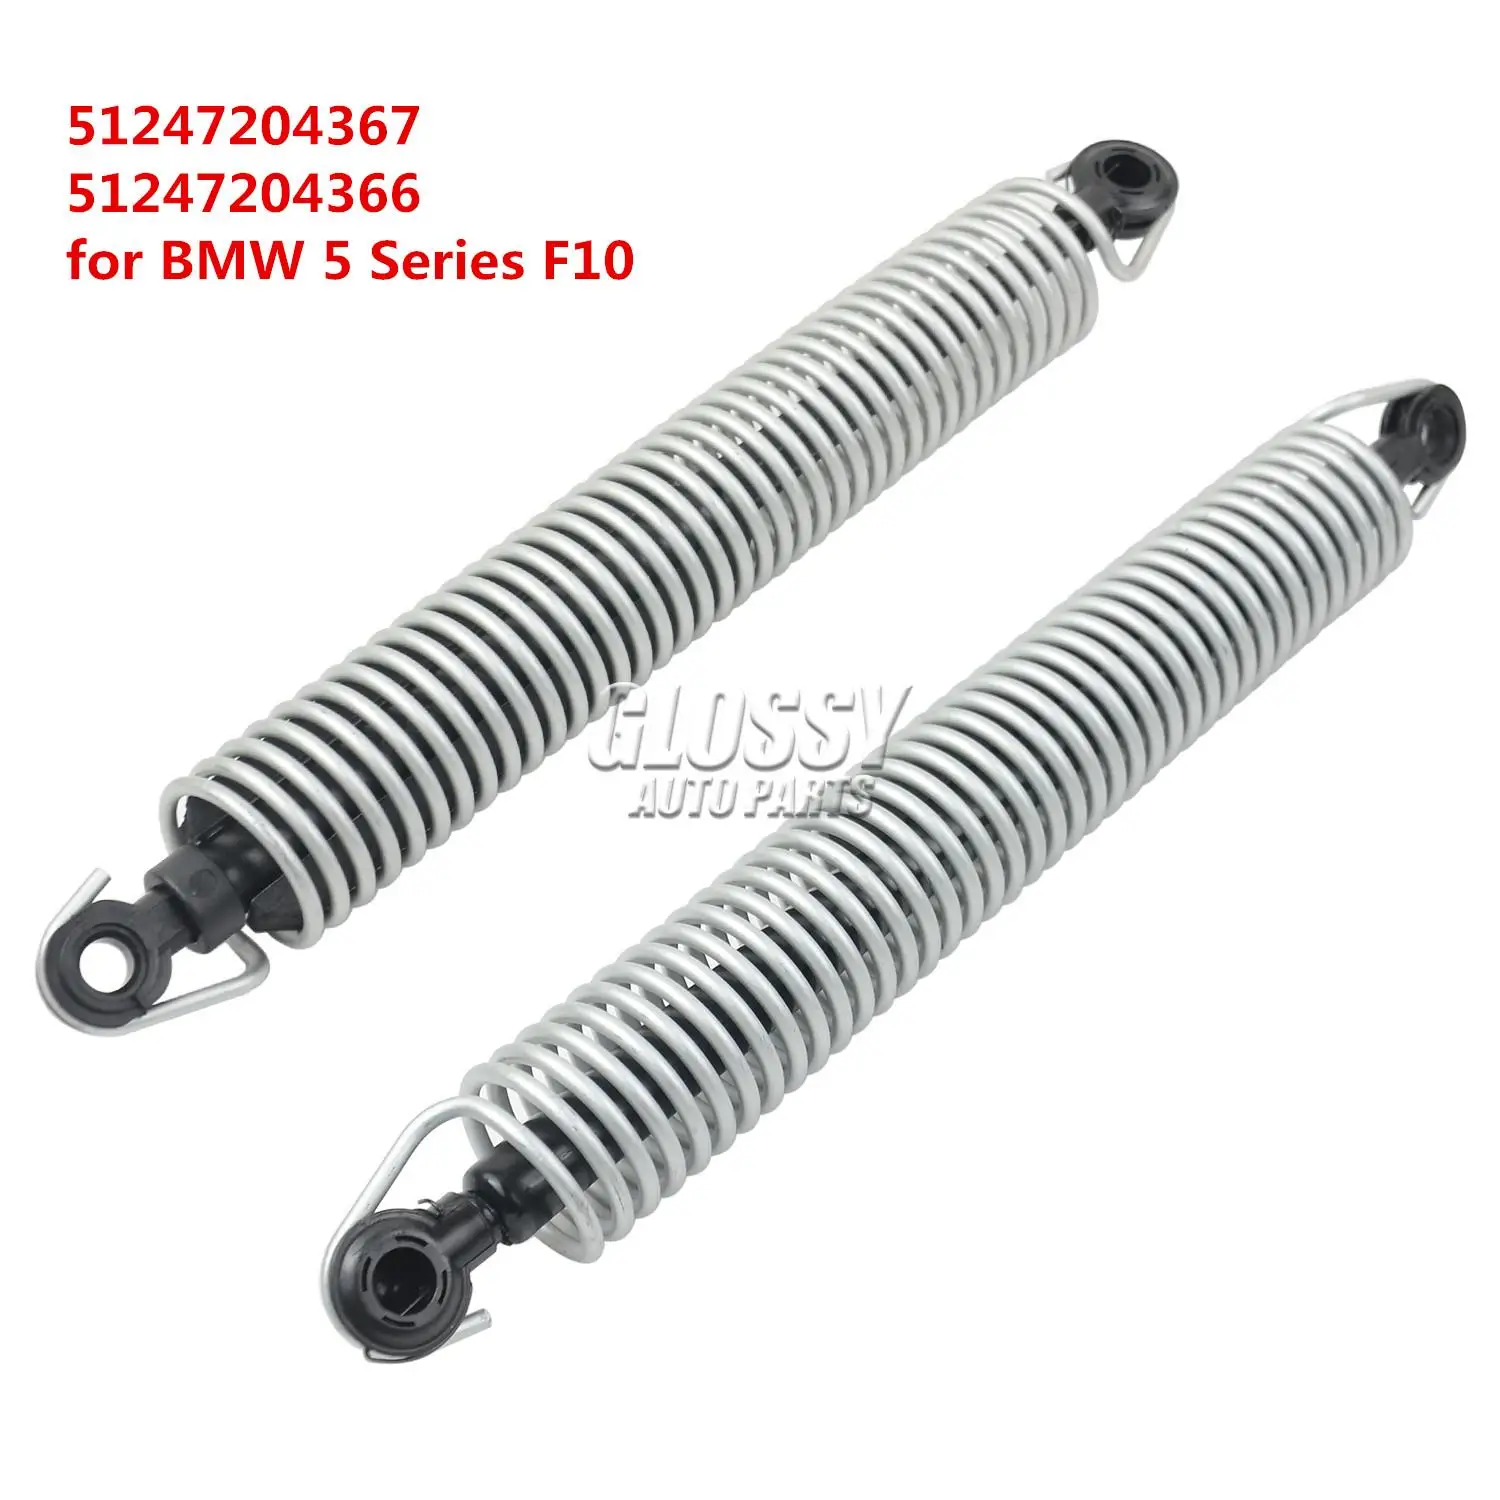 AP03 2PCS Rear Right +Left Trunk Tension Spring for BMW 5 Series F10 520i 523i 528i 535i M5 2009-2017 51247204367 51247204366